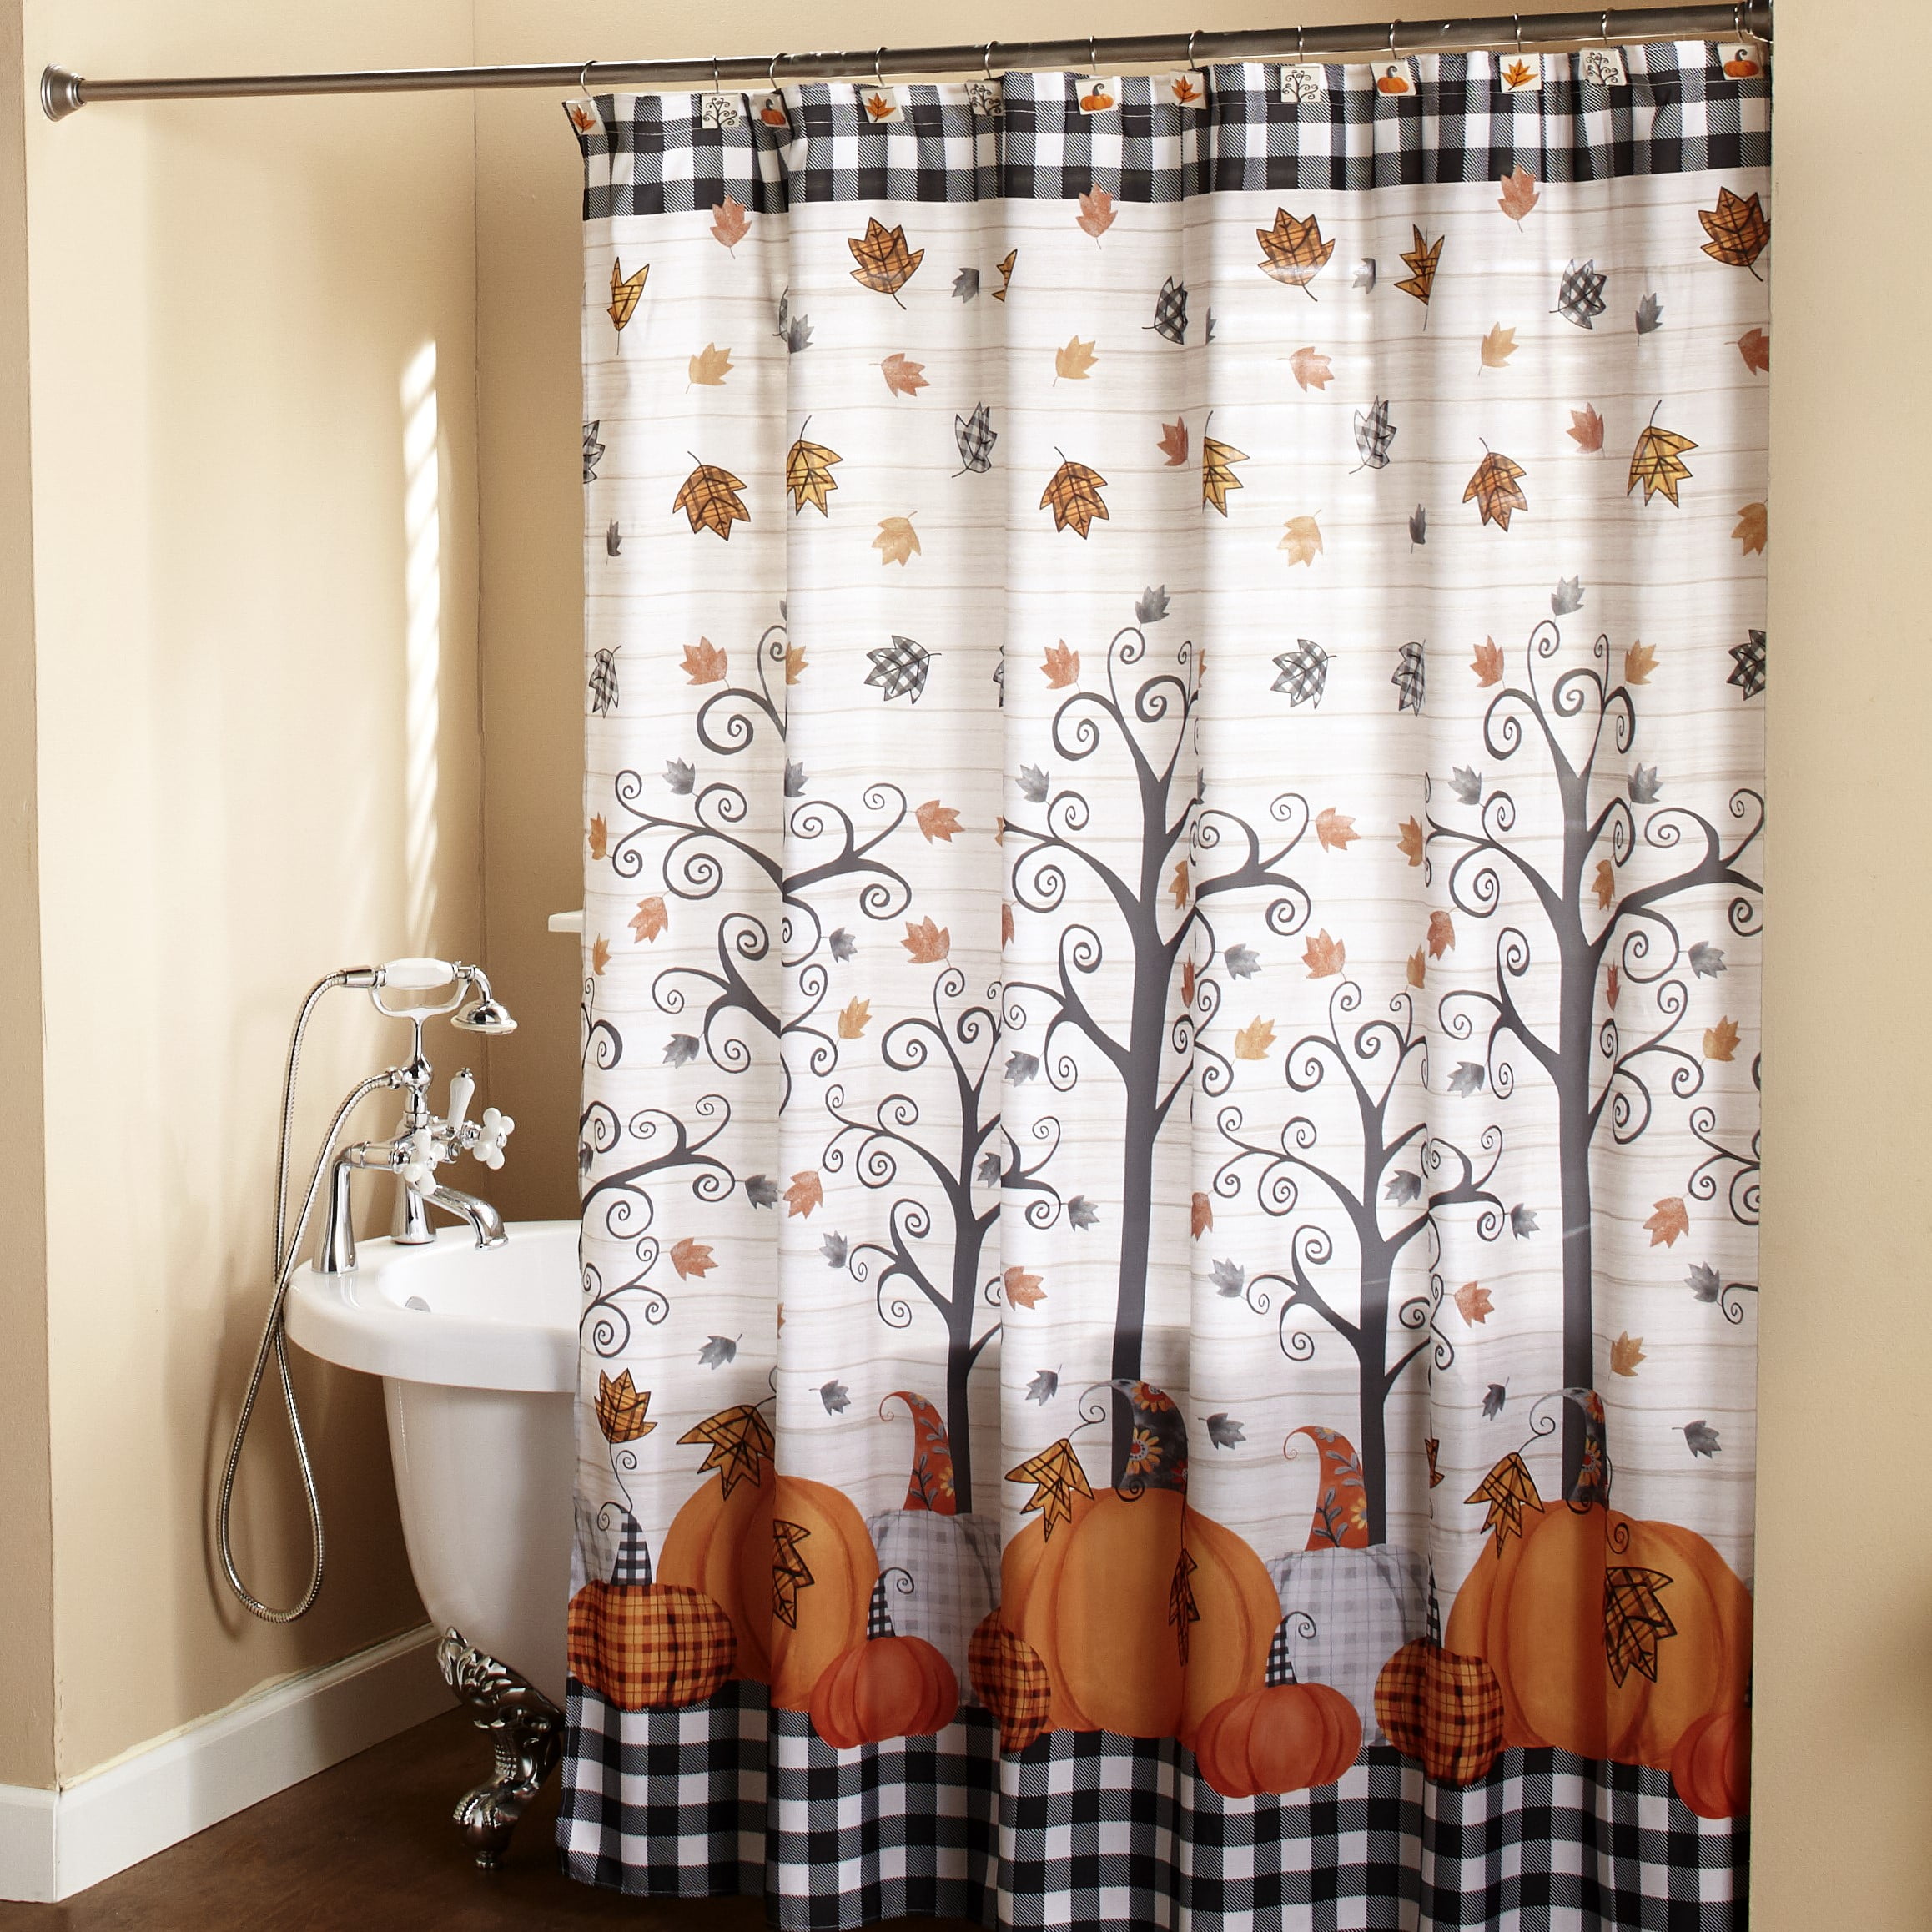 Pumpkin and Sunflower Pattern Bathroom Decor Fabric Details about   Autumn Shower Curtain Sets 